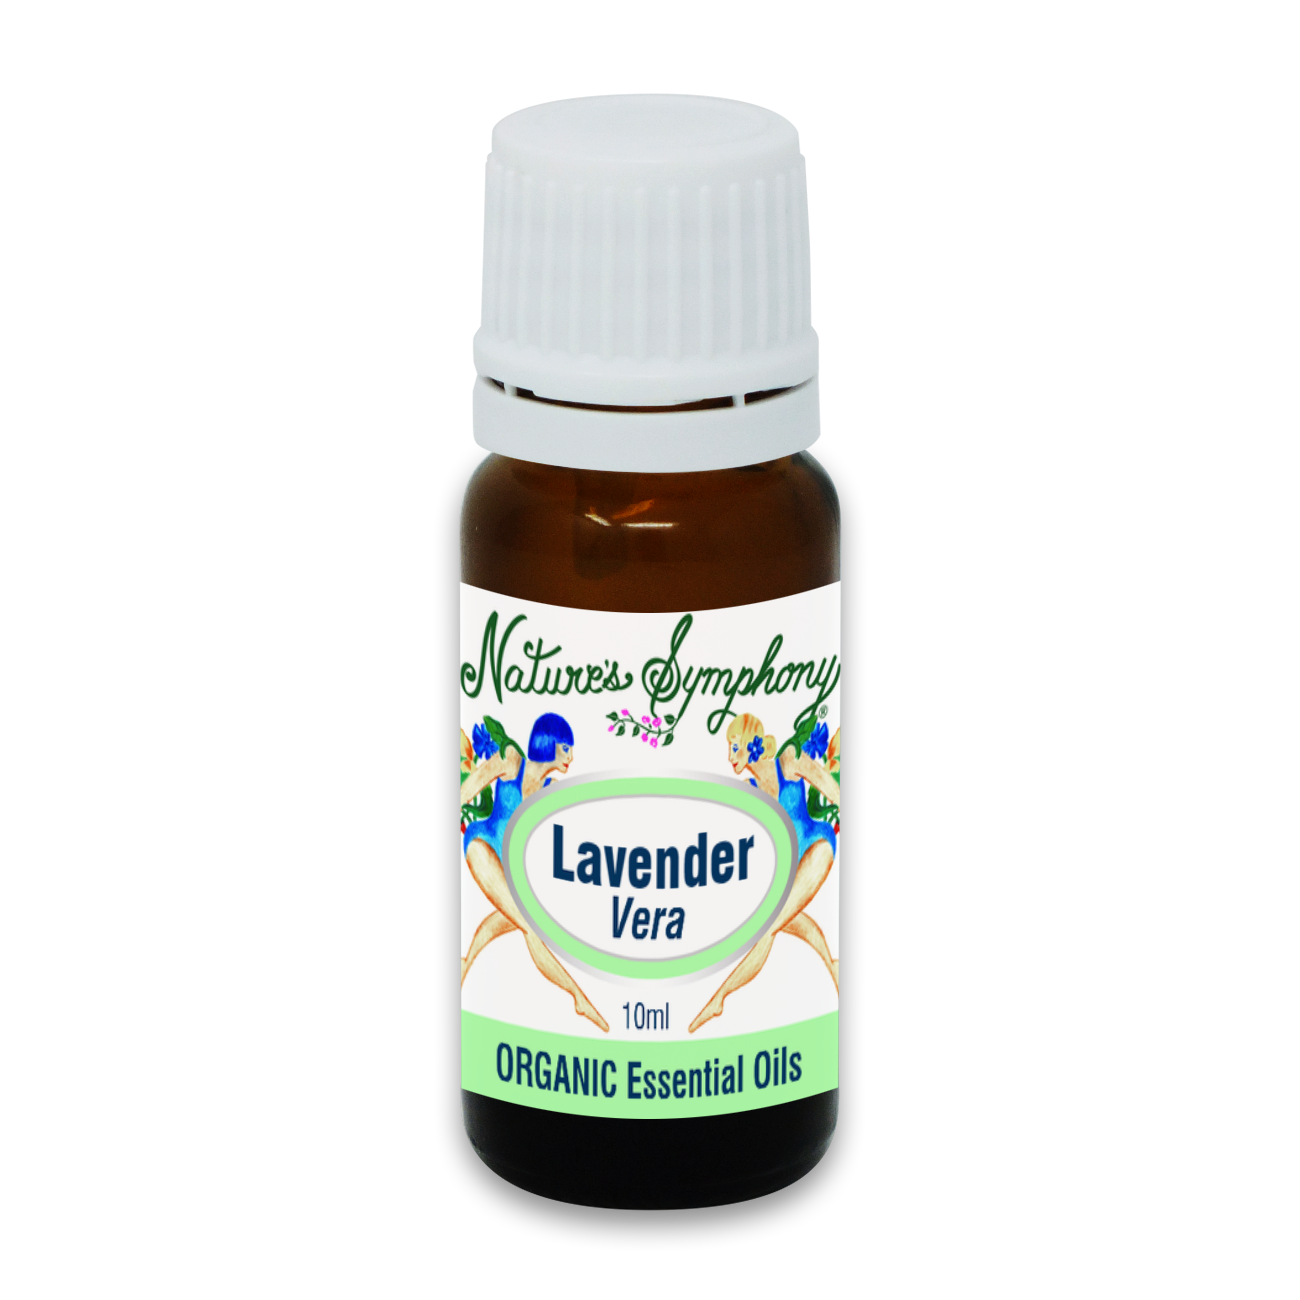 Lavender Angustifolia (Vera), Organic/Wildcrafted oil - 10ml